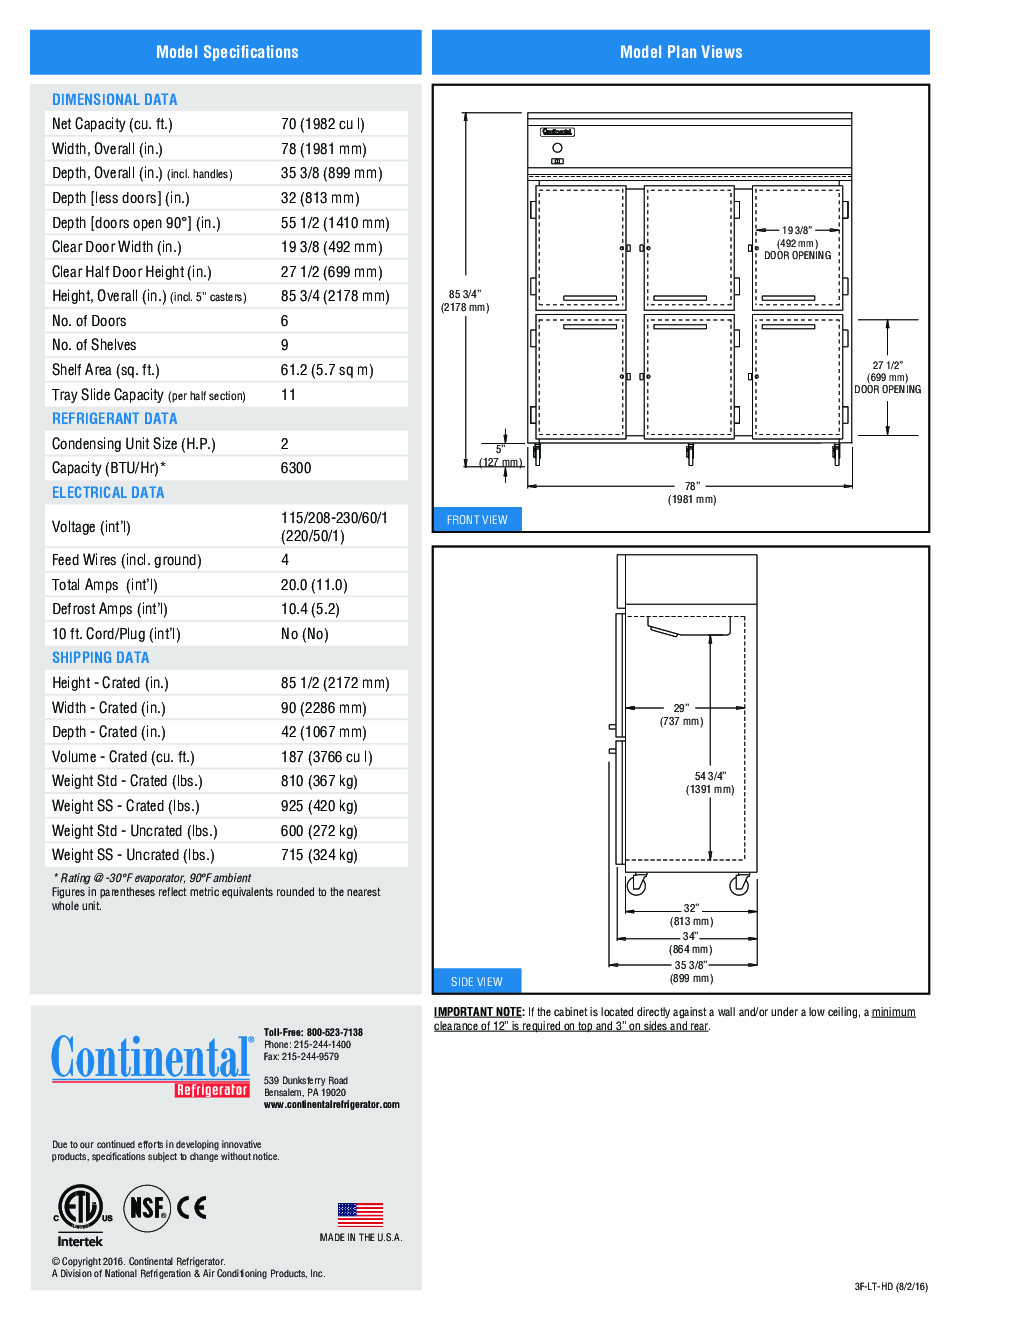 Continental Refrigerator 3F-LT-SS-HD Reach-In Low Temperature Freezer